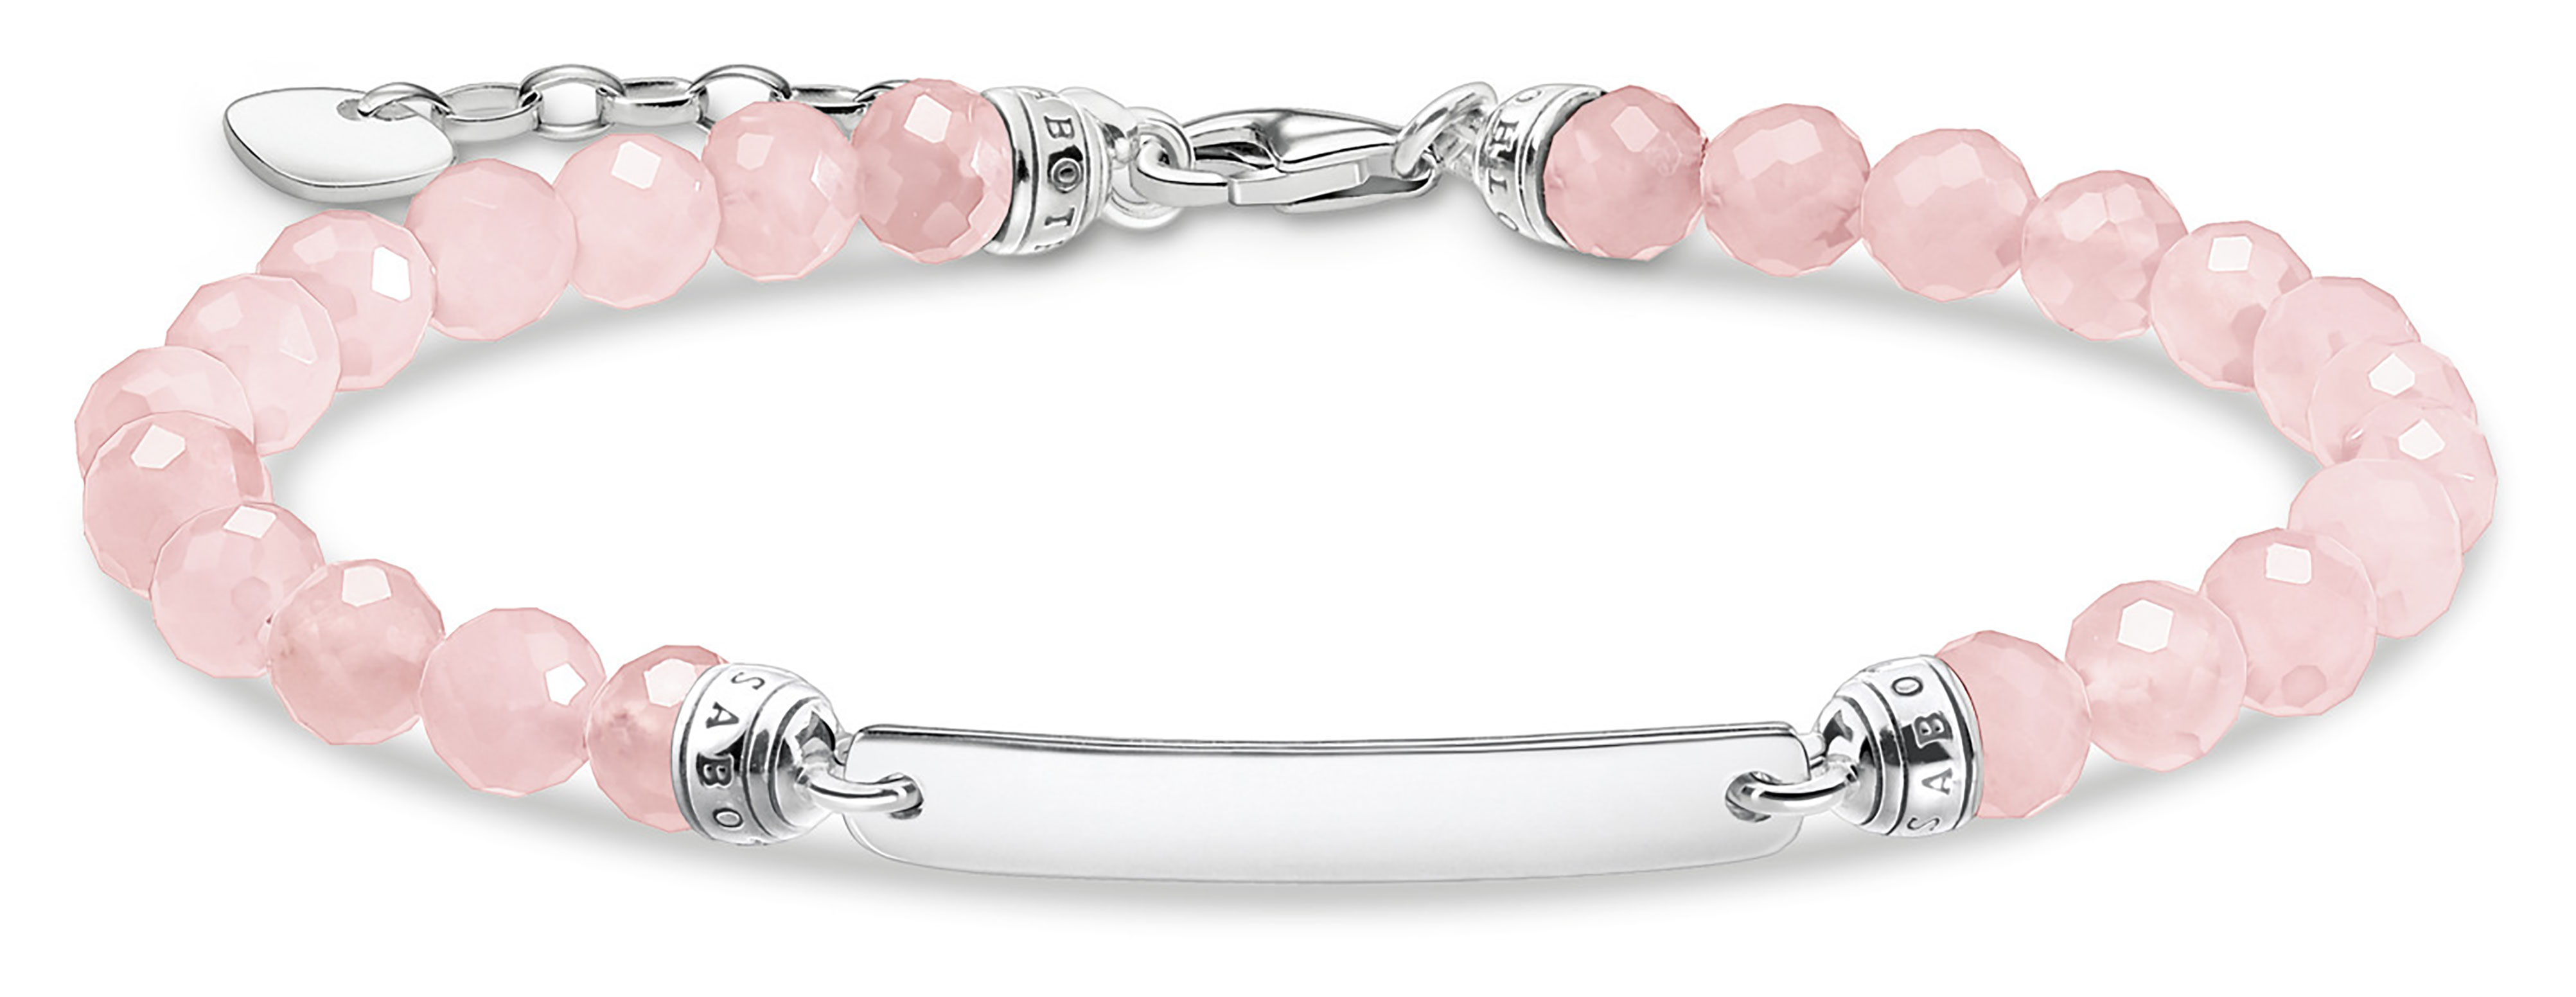 Bracelet to Mix & Match: pink jasper beads & zirconia │ THOMAS SABO |  Silver bracelets for women, Sterling silver bracelets, Silver heart bracelet